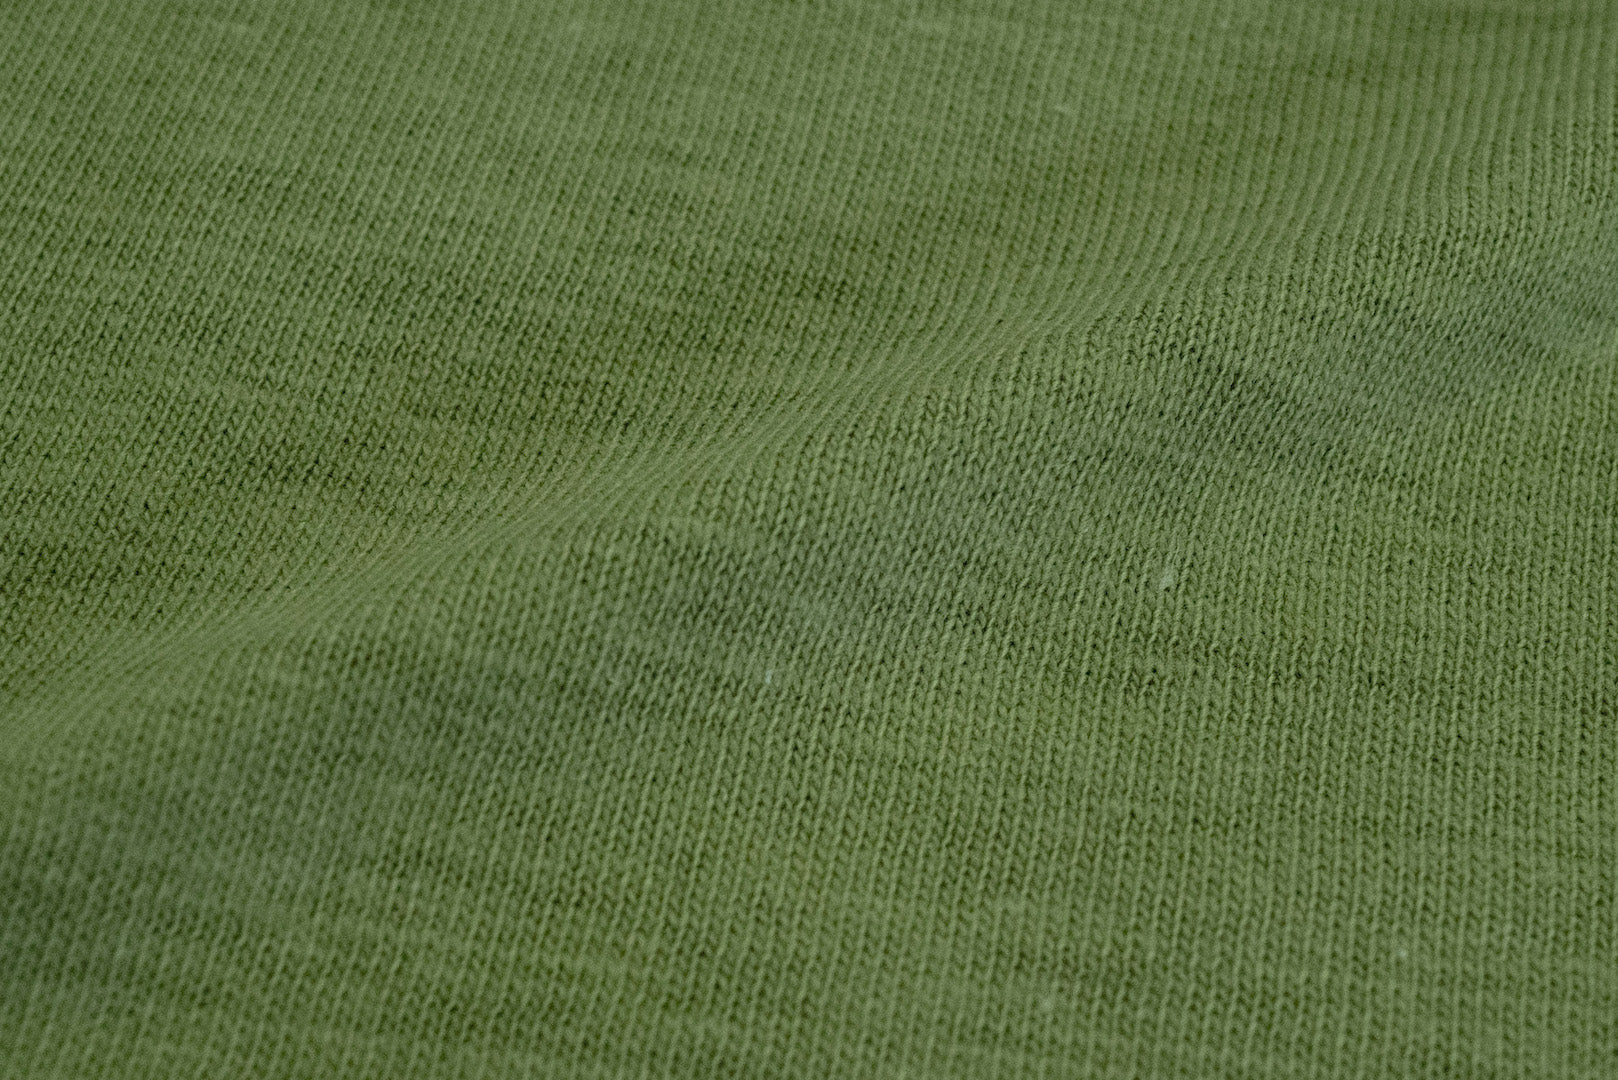 Warehouse 5.5oz "Bamboo Textured" Pocket Tee (Grass Green)